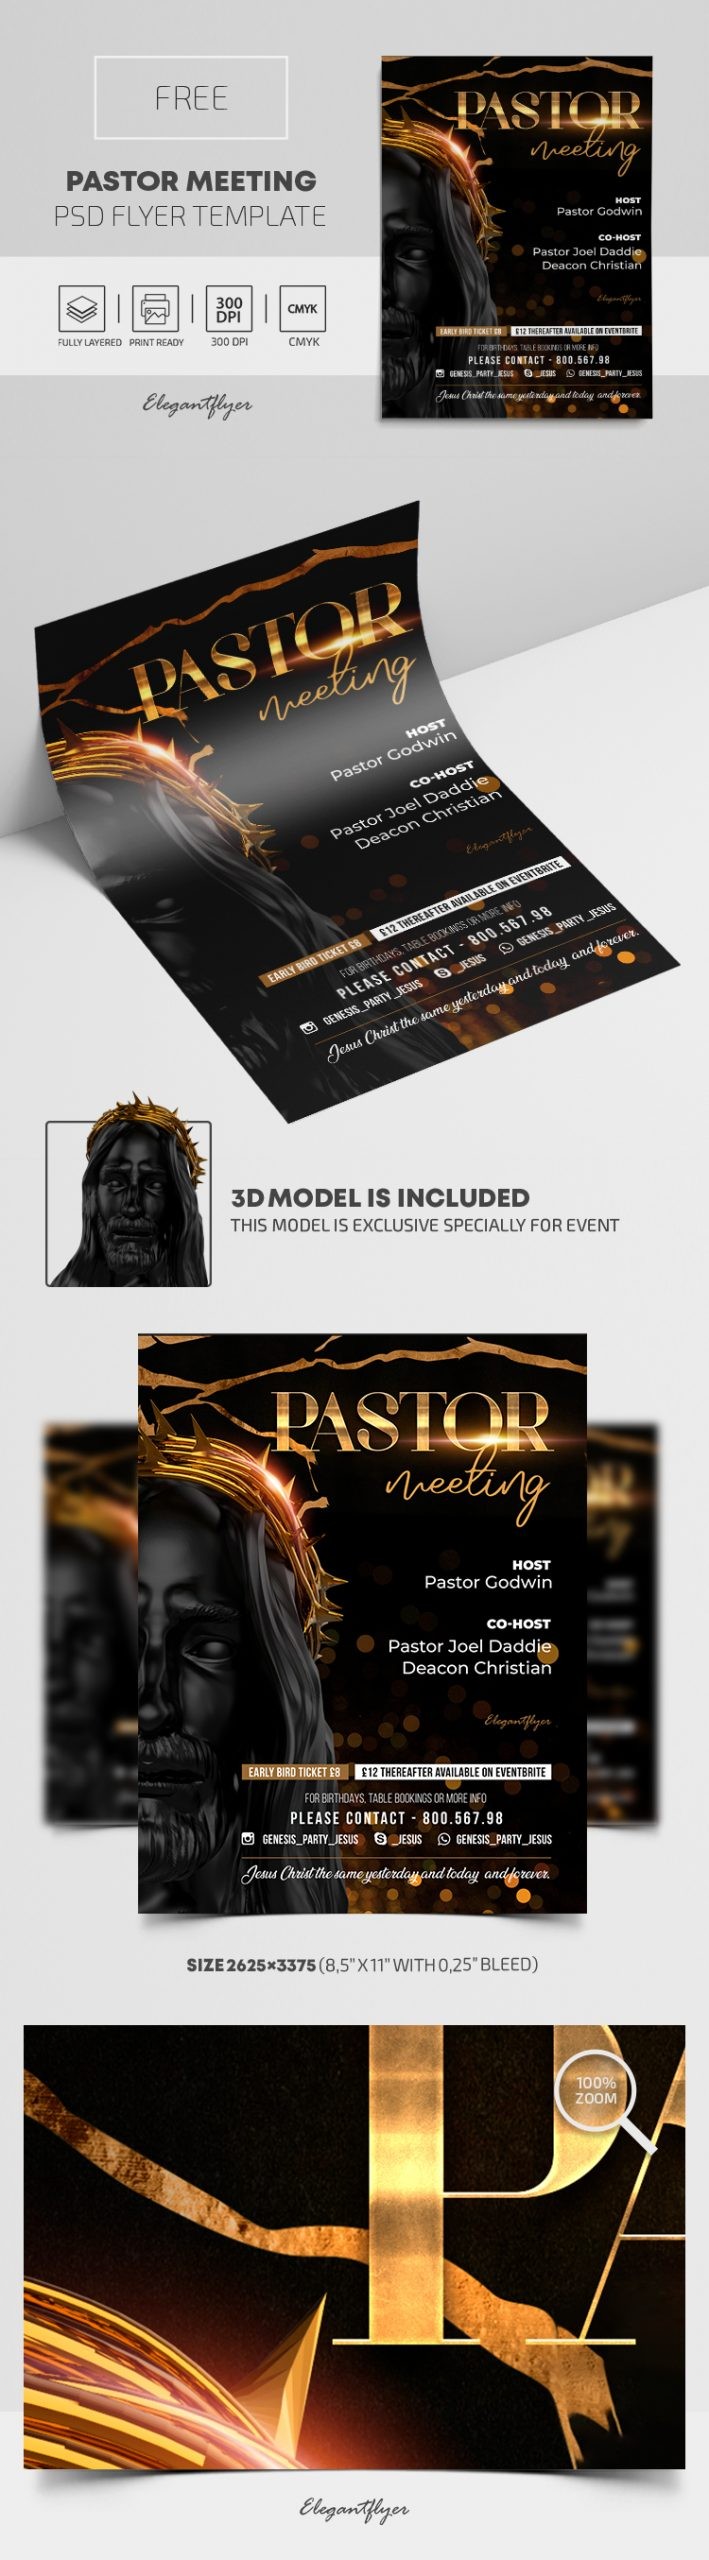 Pastor Meeting Flyer by ElegantFlyer